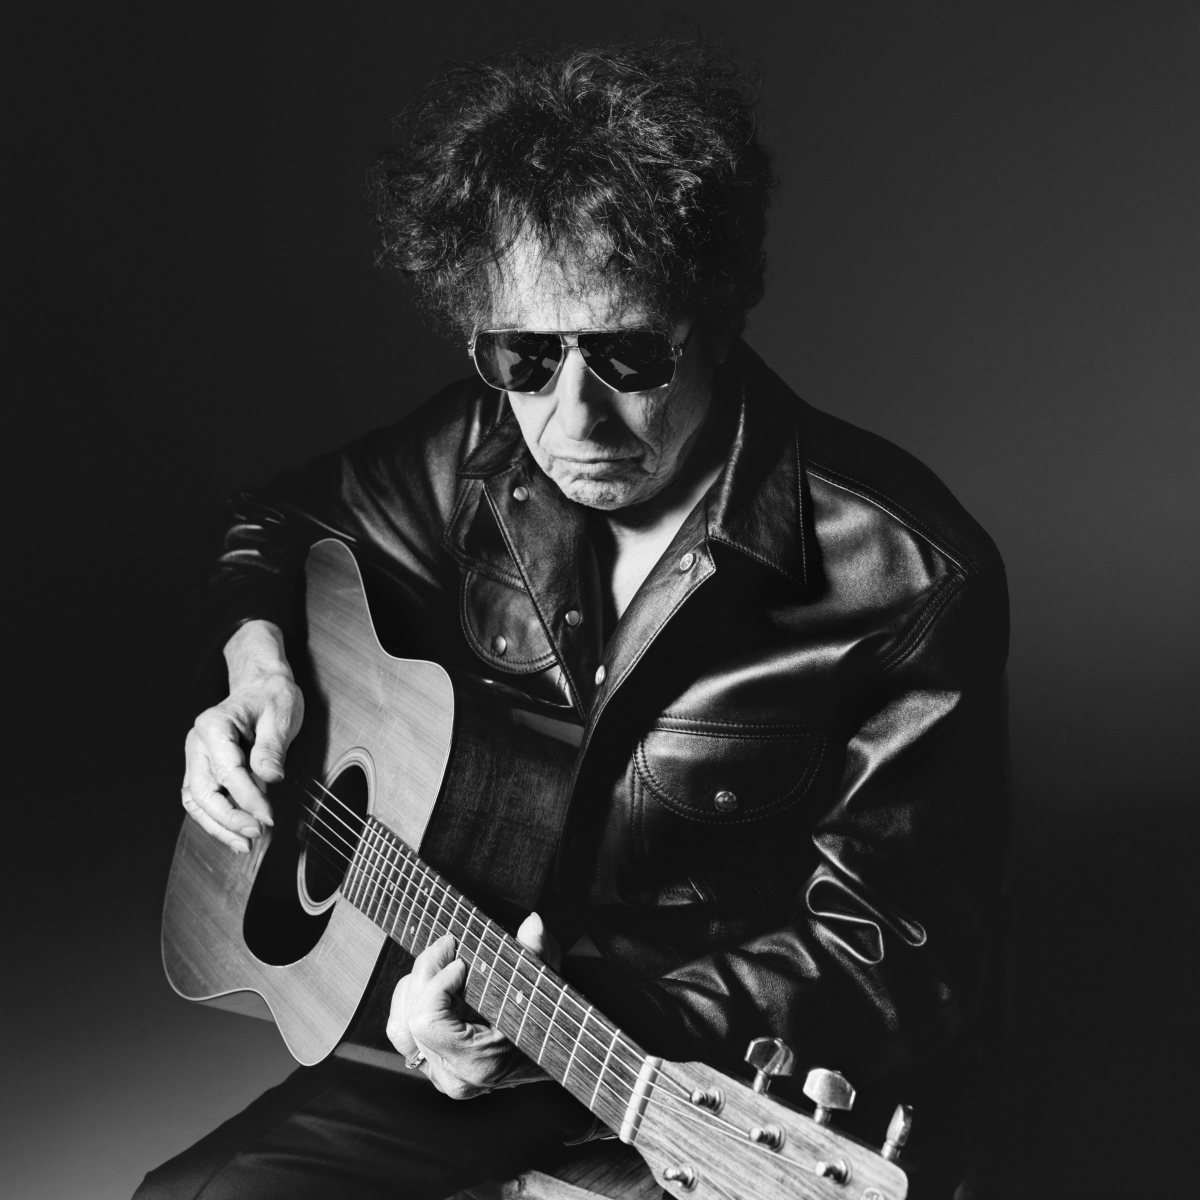 Celine Homme: Portrait Of A Musician - Bob Dylan